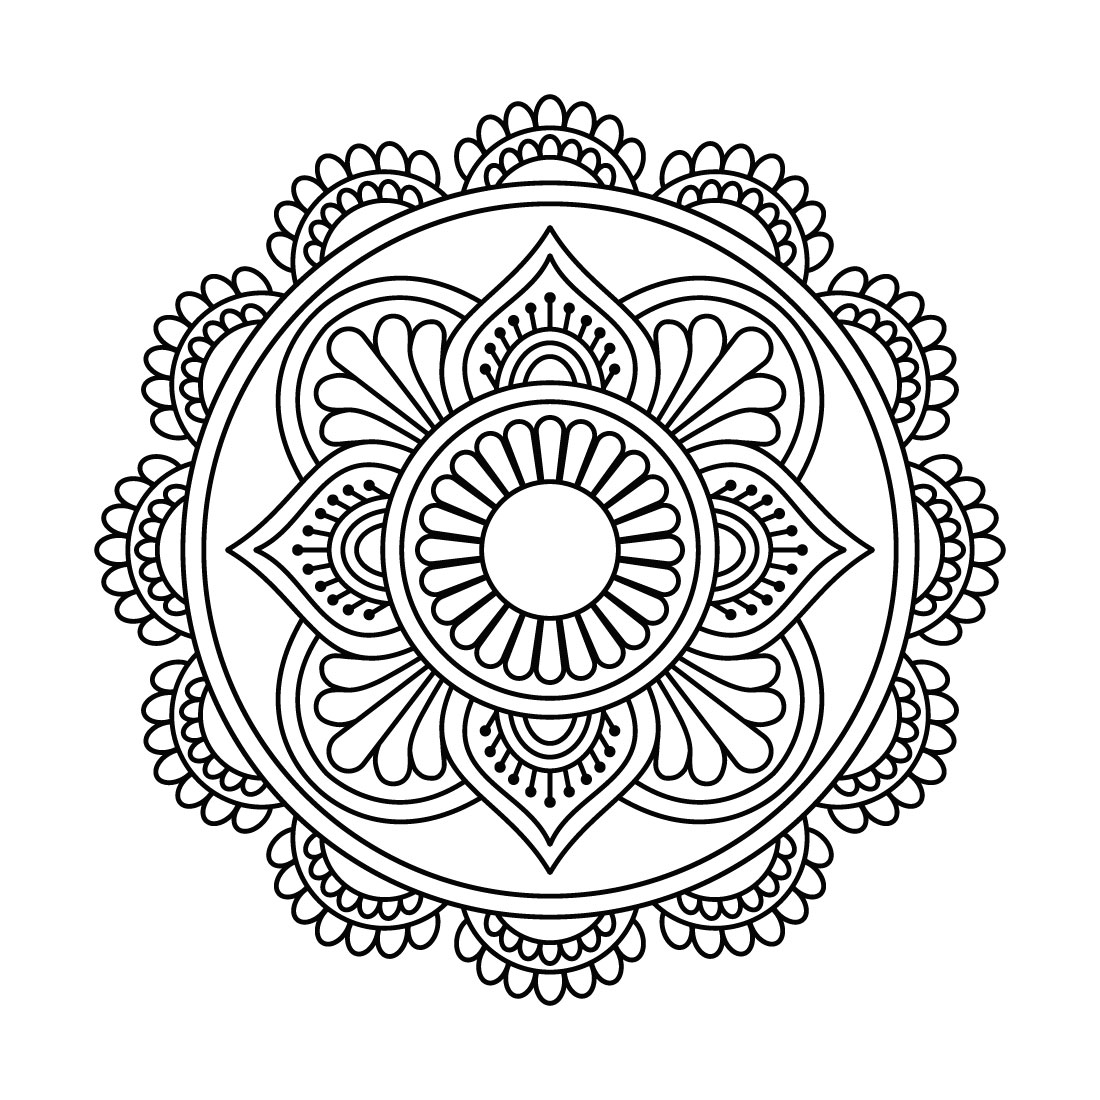 Mandala Coloring Page Flower Design Element for Adult Color Book